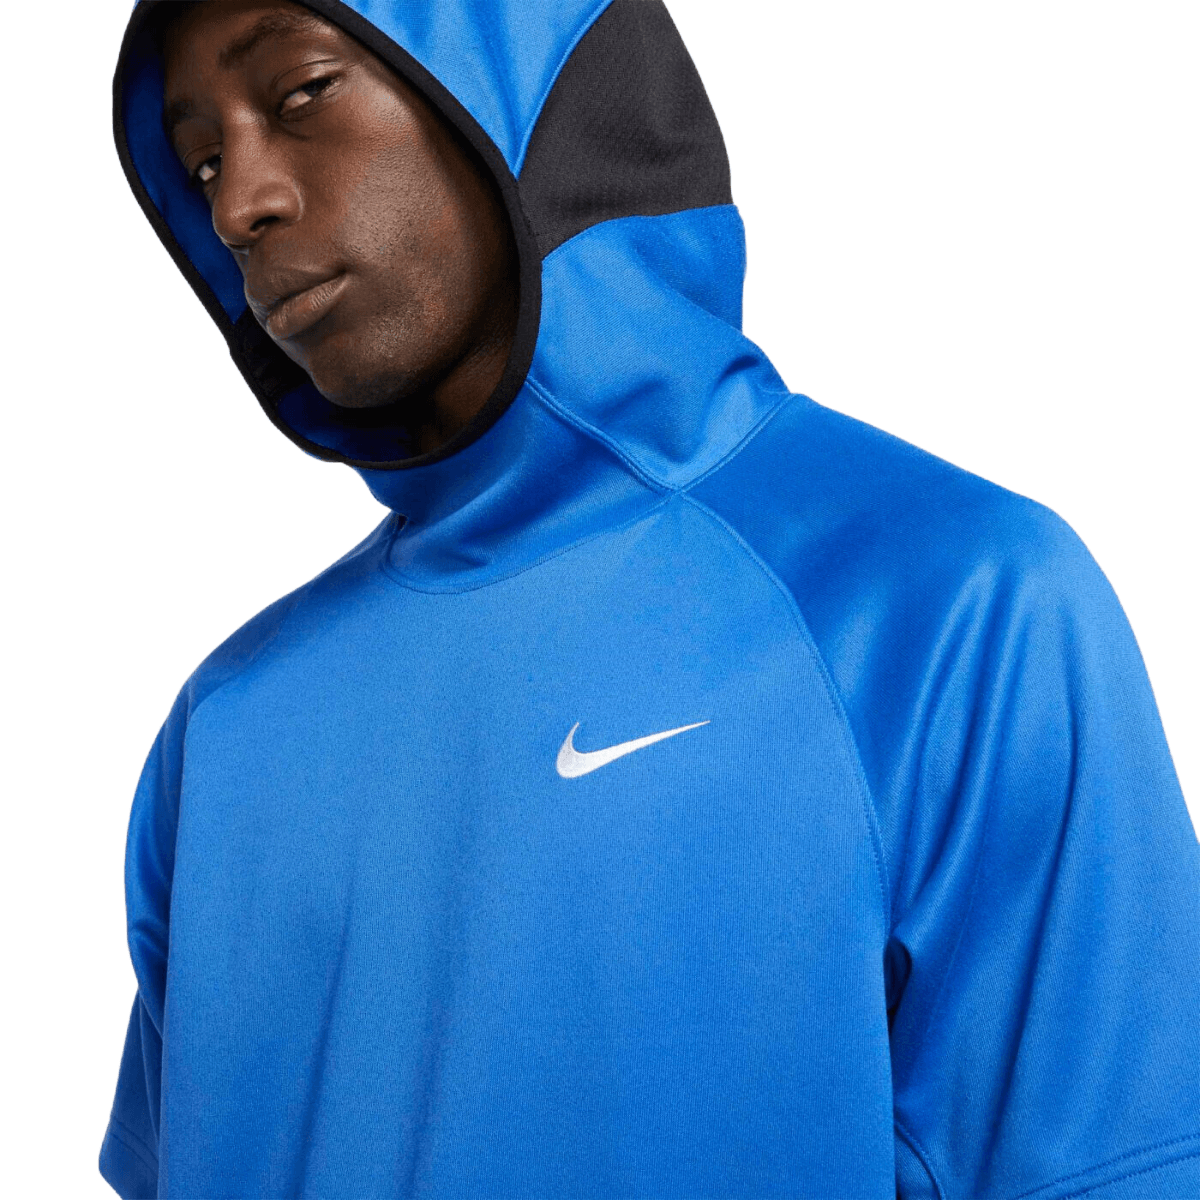 Nike Spotlight Short-Sleeve Hoodie - Men's - Als.com